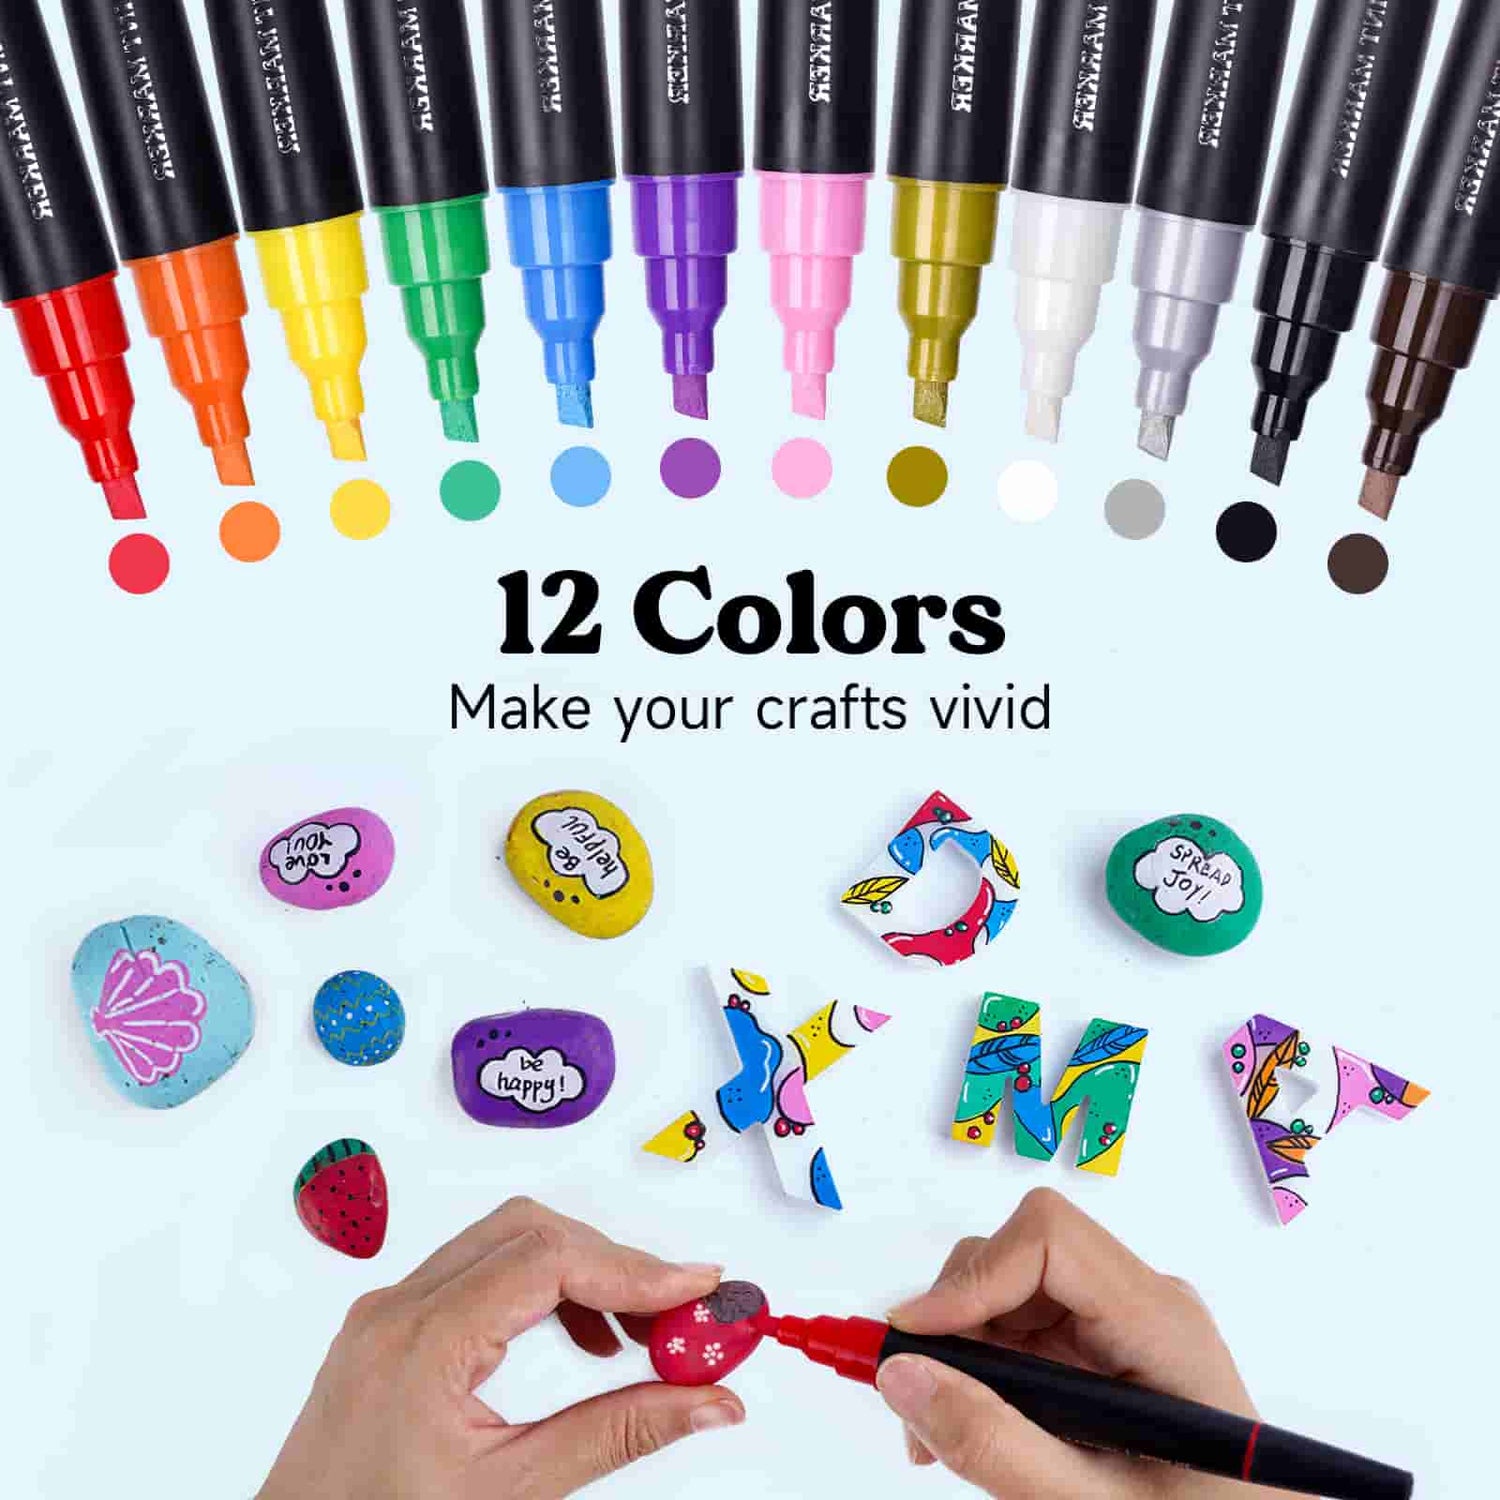 6 Color Paint Marker Set - Vibrant And Opaque Fine Art Graffiti